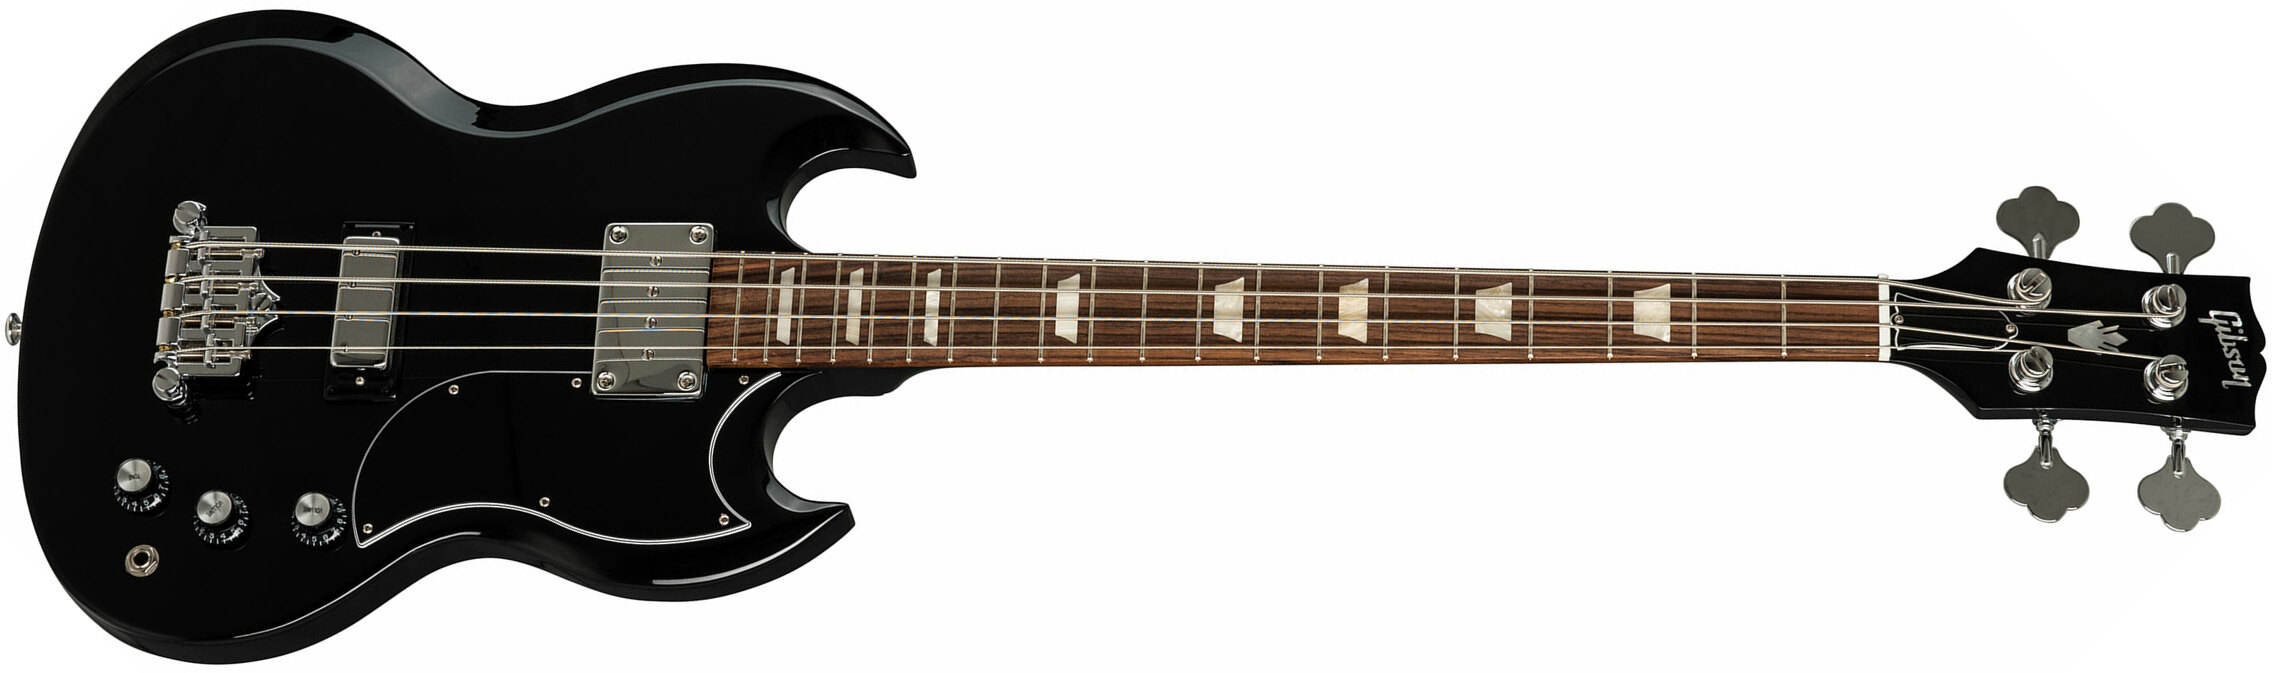 Gibson Sg Standard Bass - Ebony - Solid body elektrische bas - Main picture